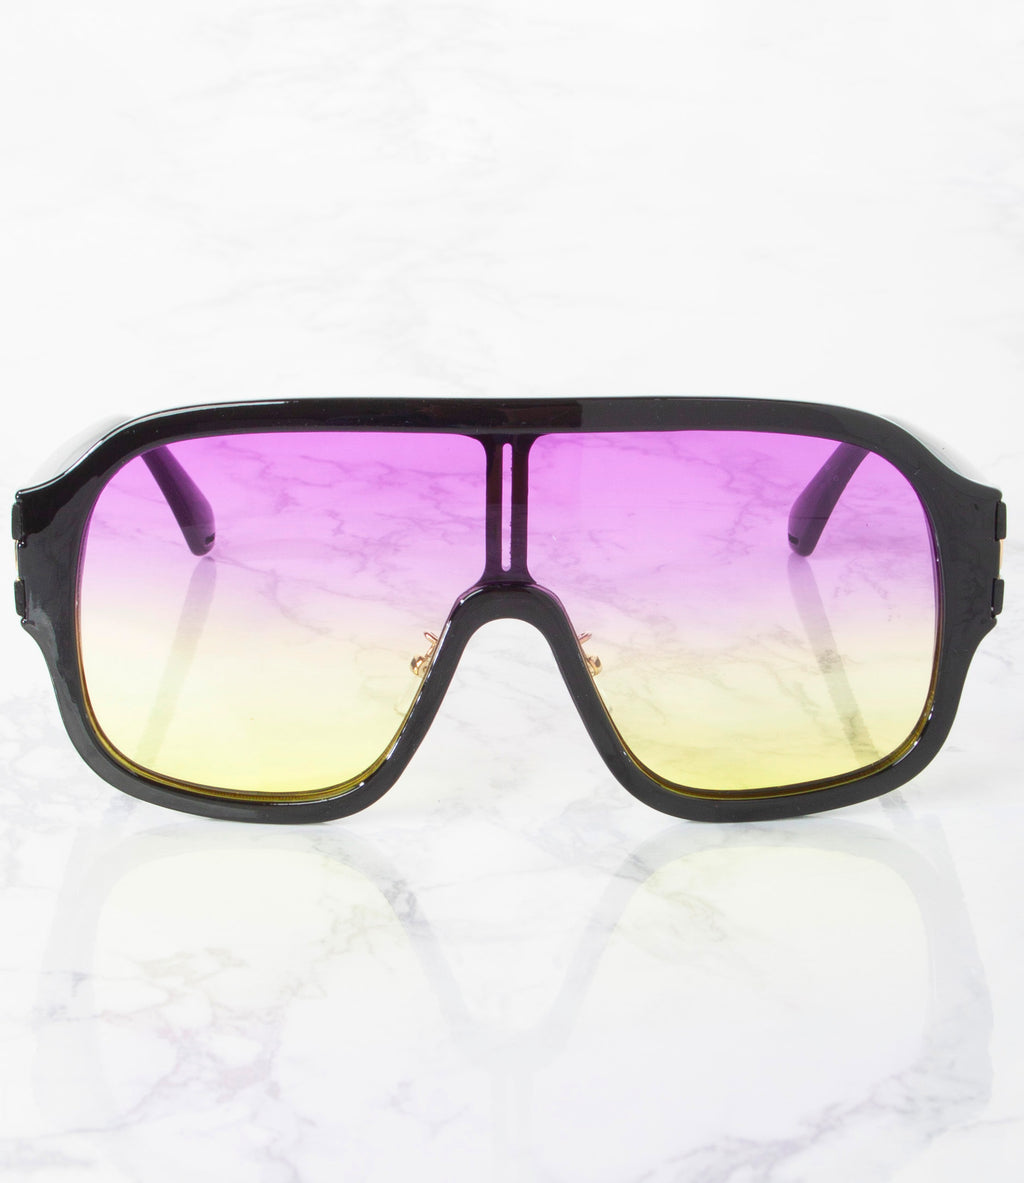 Single Color Sunglasses - P20419AP/MC-GOLD-TO-PURPLE - Pack of 6 - $3.50/piece